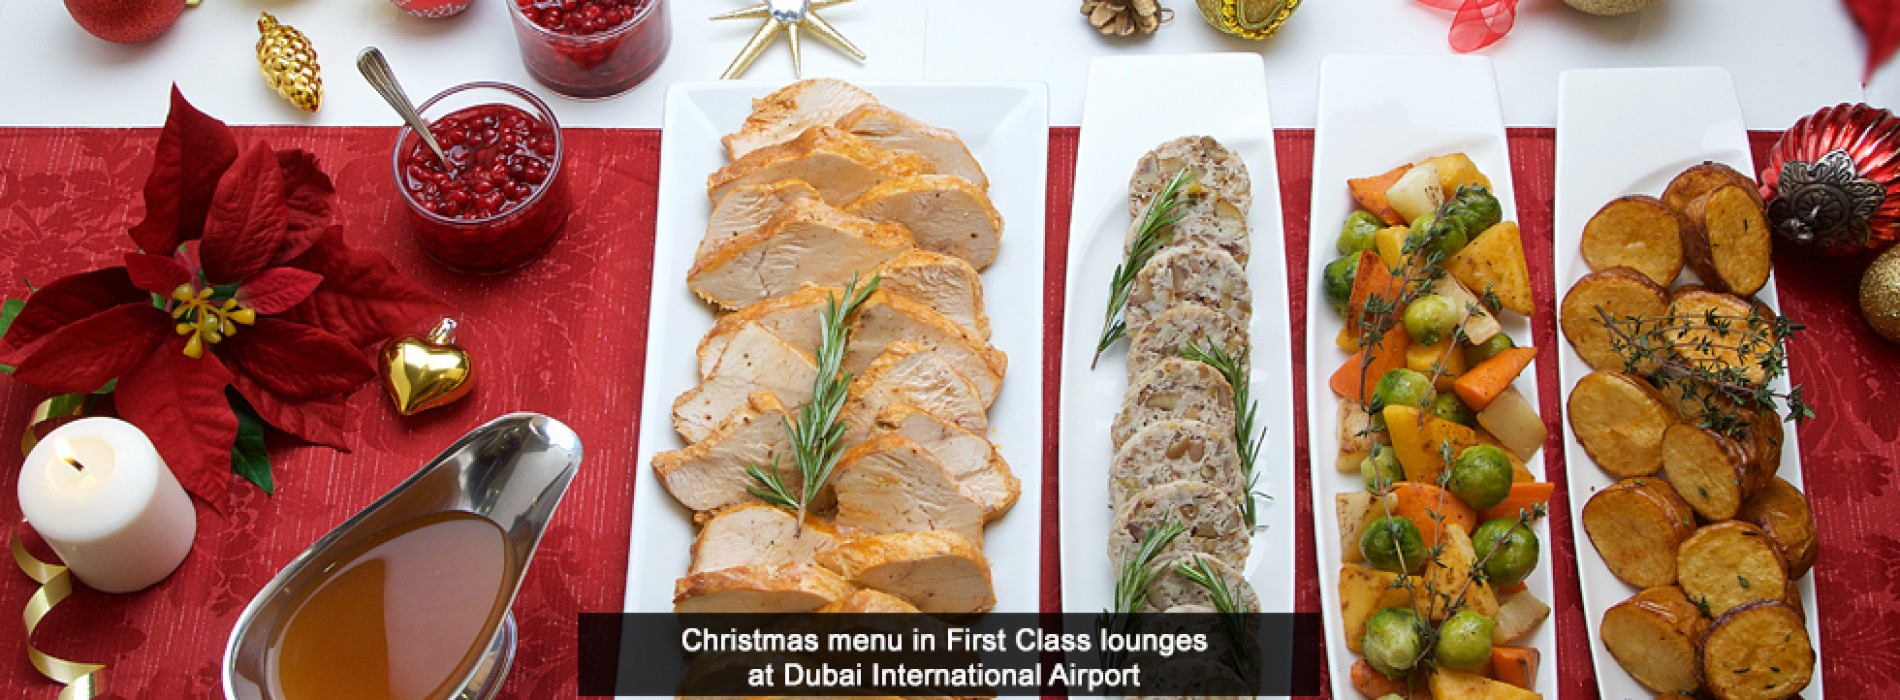 Emirates celebrates holiday season with special Christmas treats